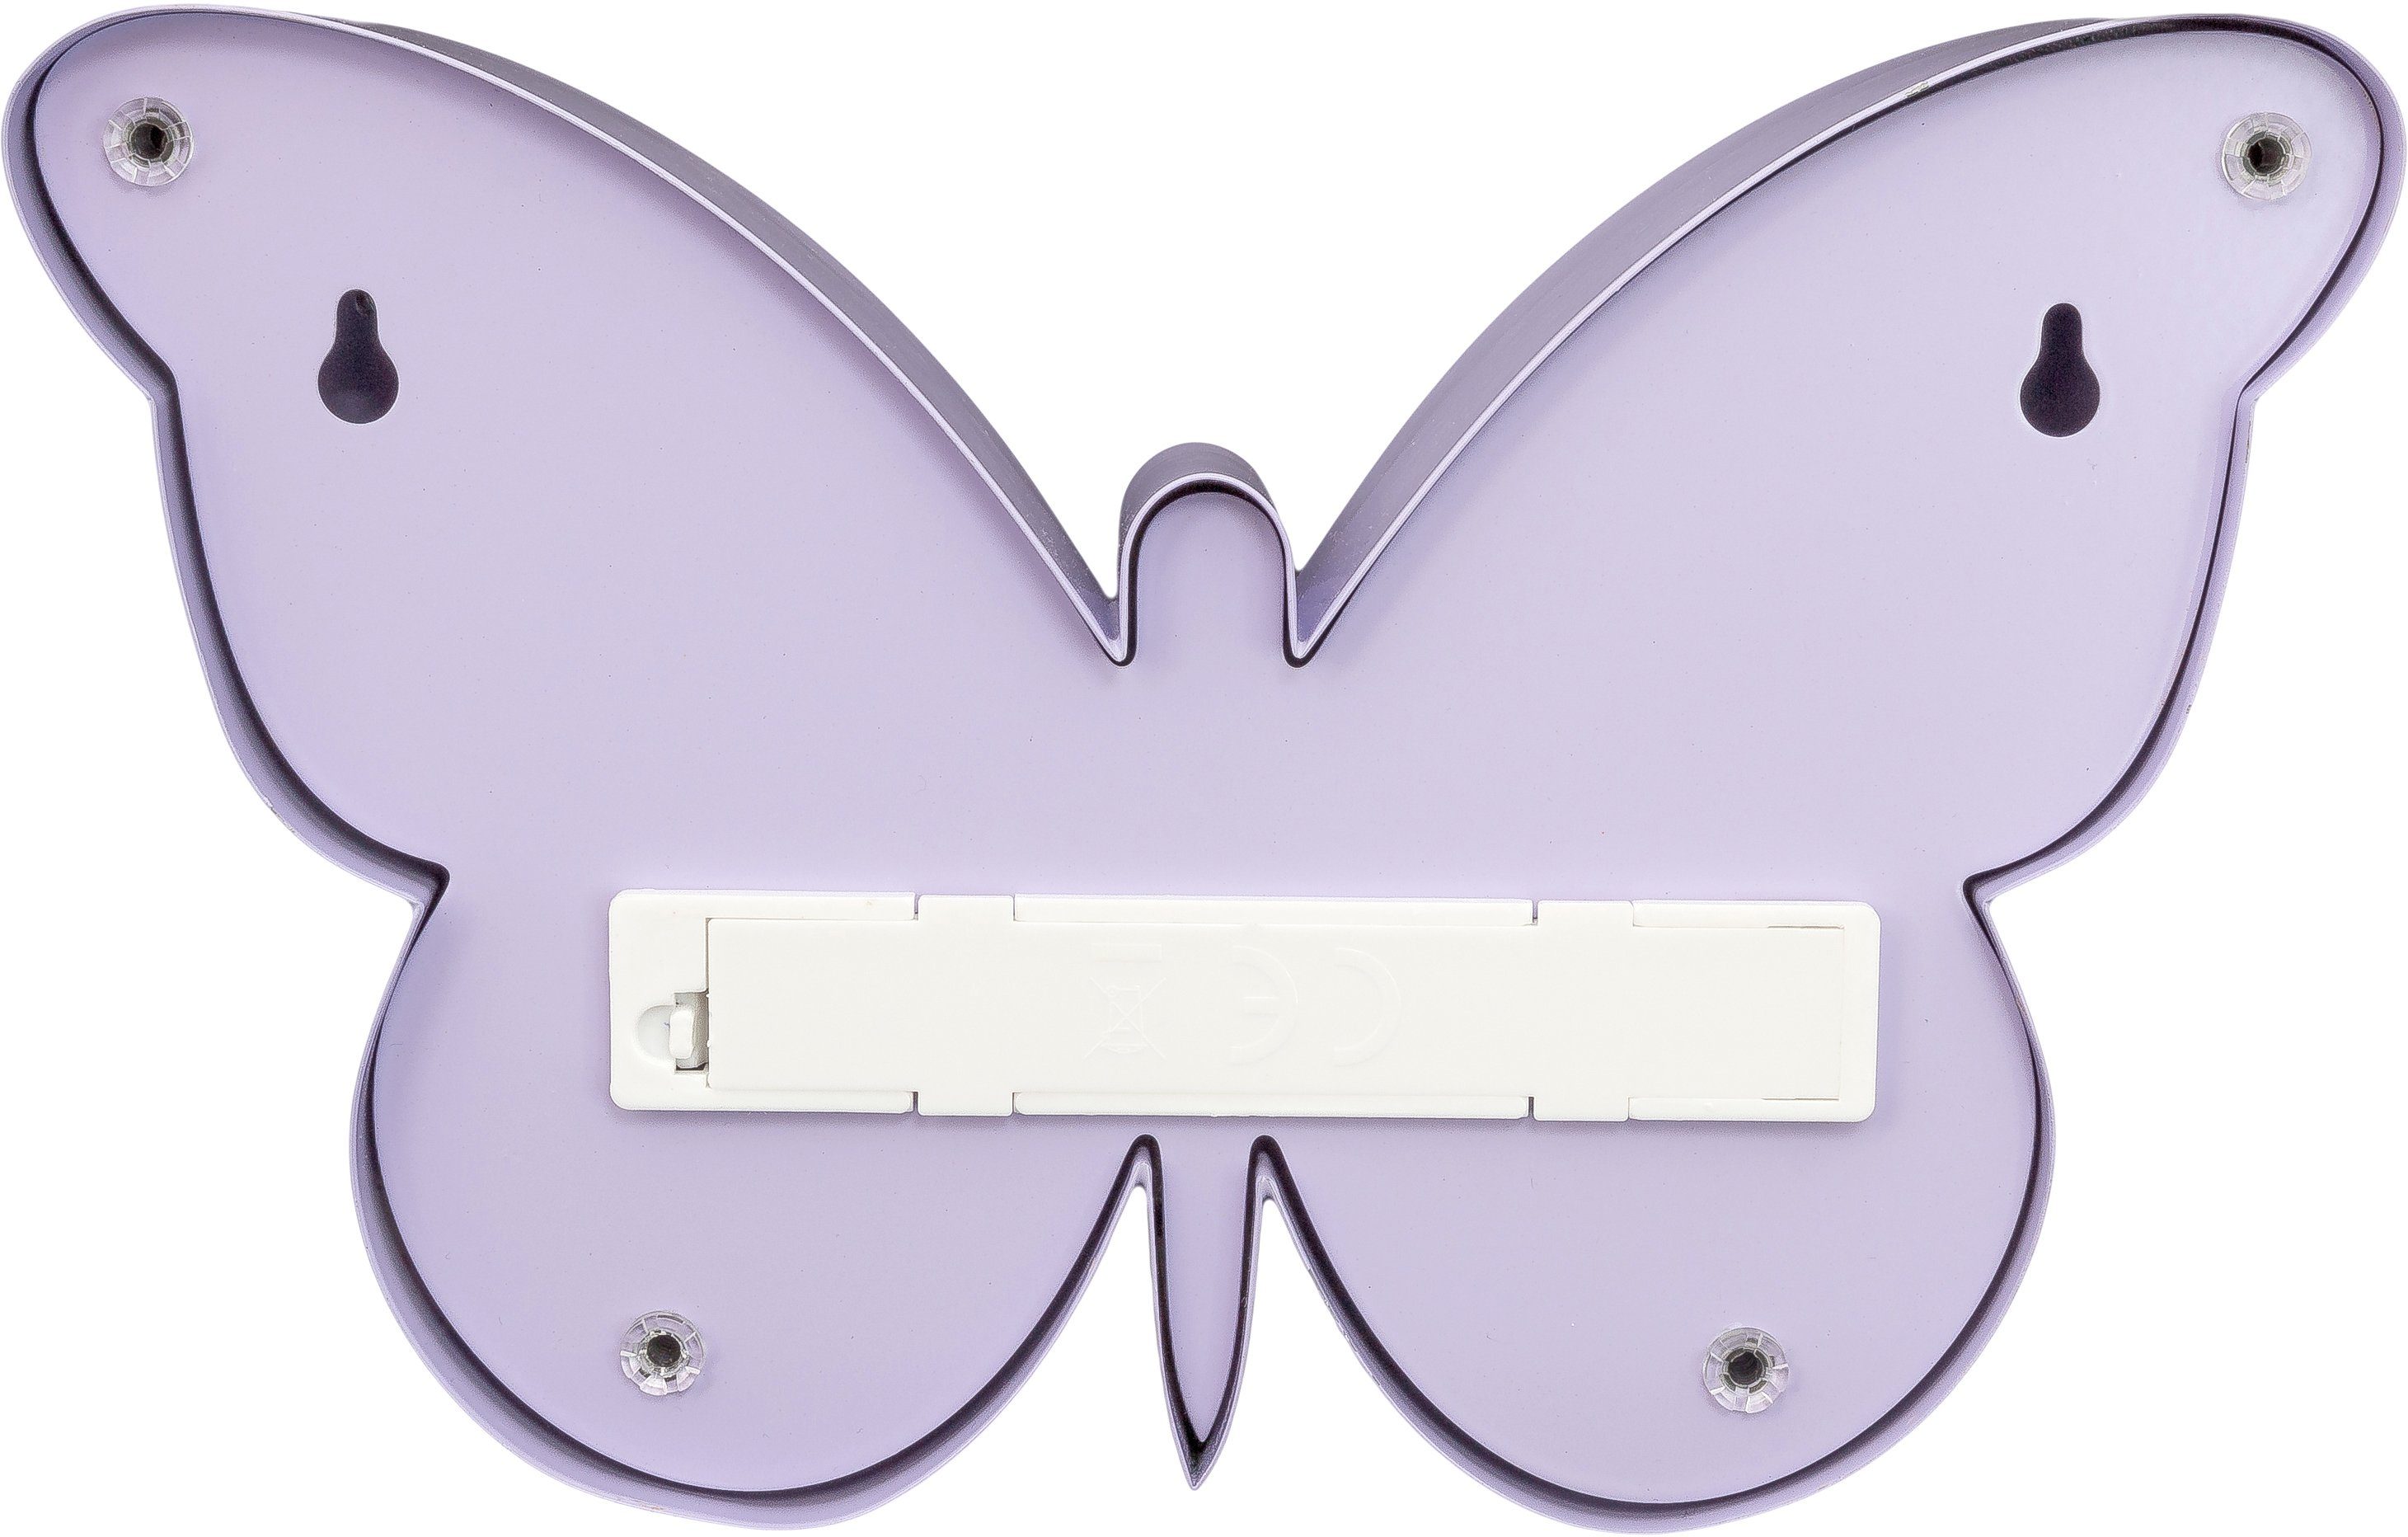 MARQUEE LIGHTS LED Dekolicht Butterfly, Wandlampe, fest LEDs 15 15 cm Tischlampe lila integriert, LED 23x mit - Warmweiß, festverbauten Butterfly